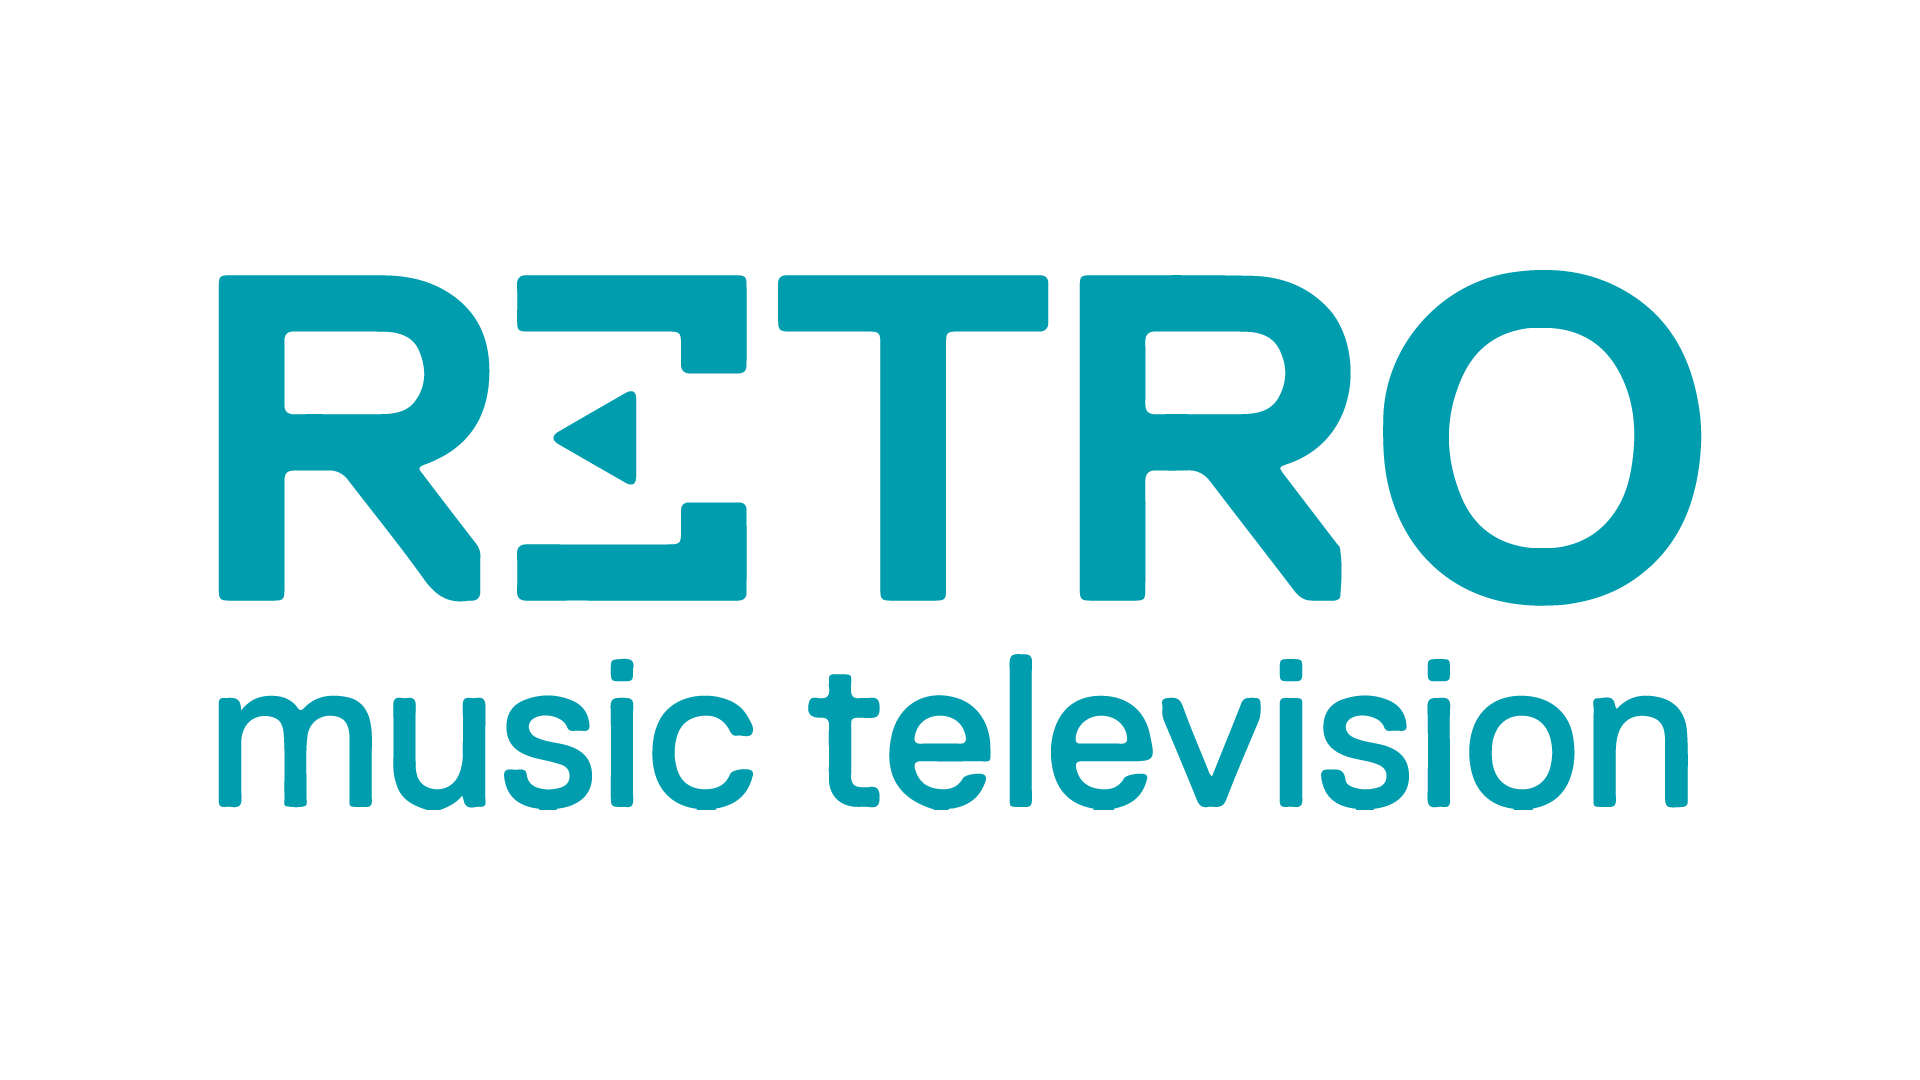 Retro Music Television Live TV, Online